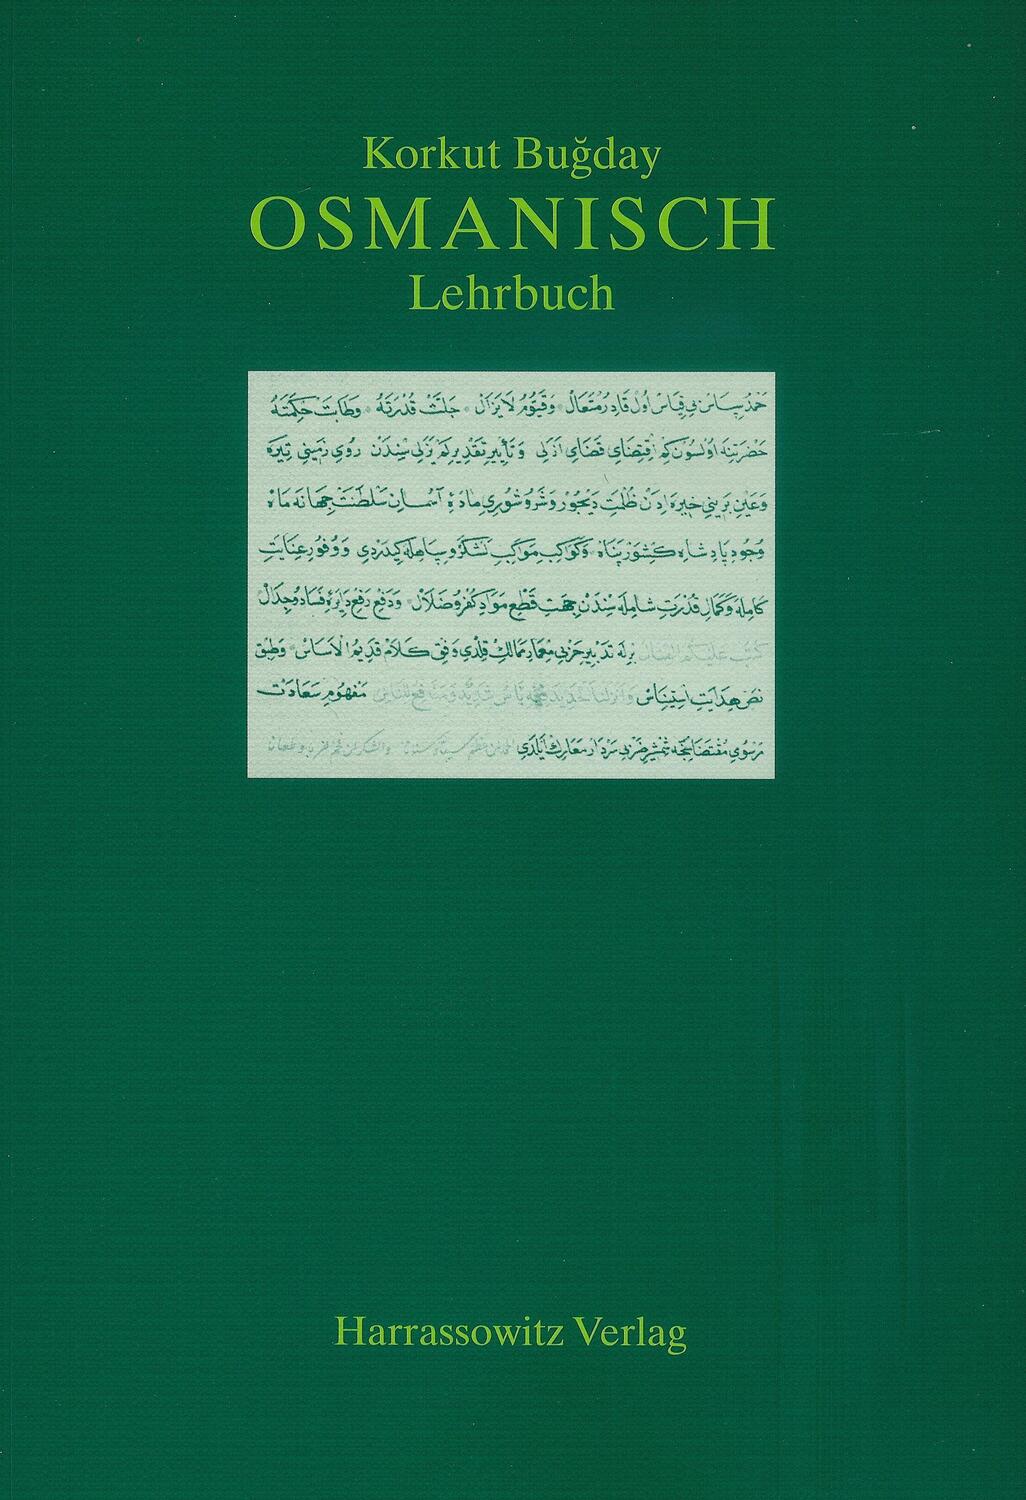 Osmanisch. Lehrbuch - Bugday, Korkut